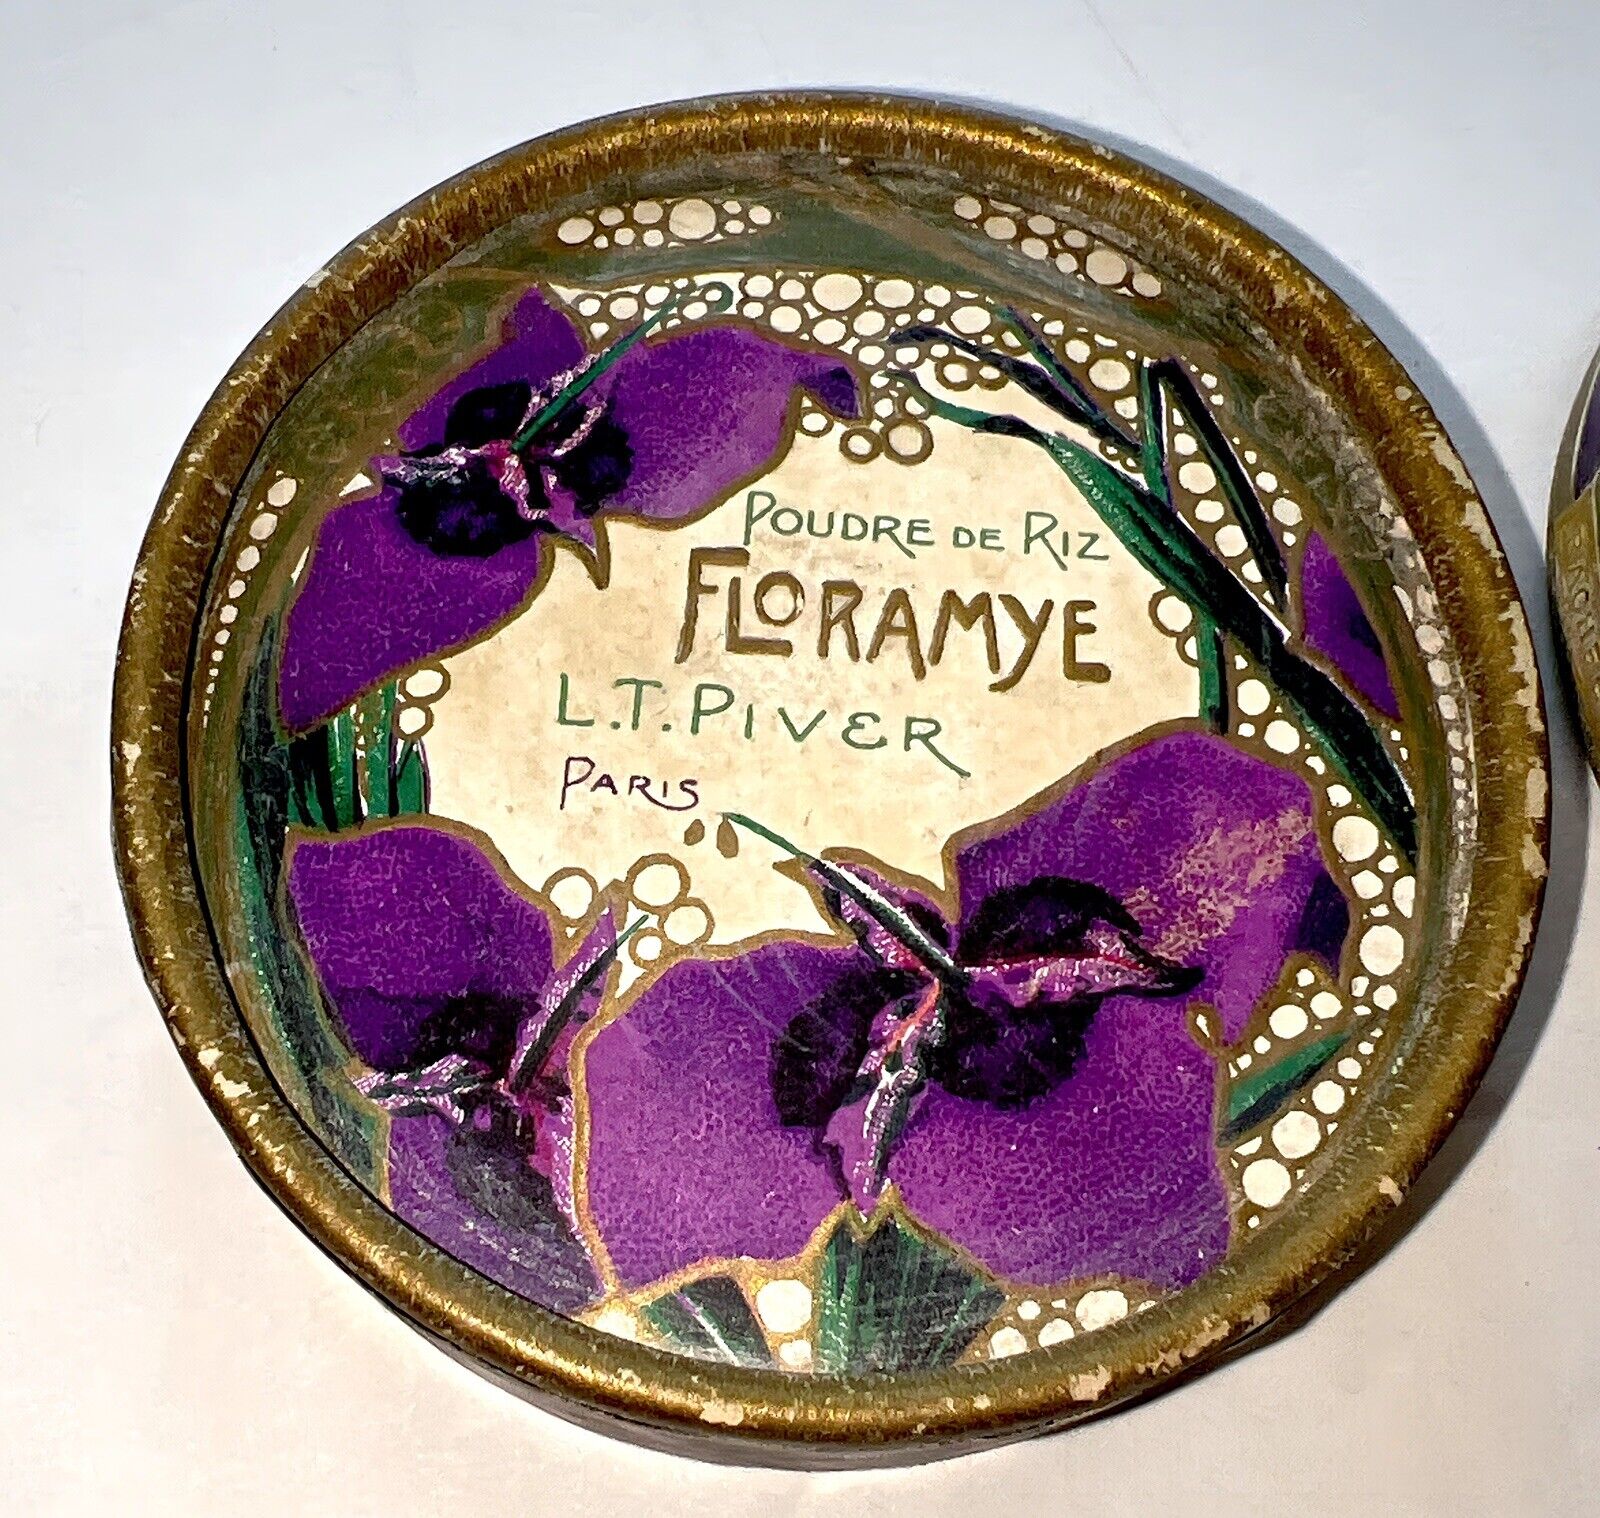 Rare Antique 1922 L.T. Liver “FLORAMYE” Face Powder Box Paris Unsealed Full